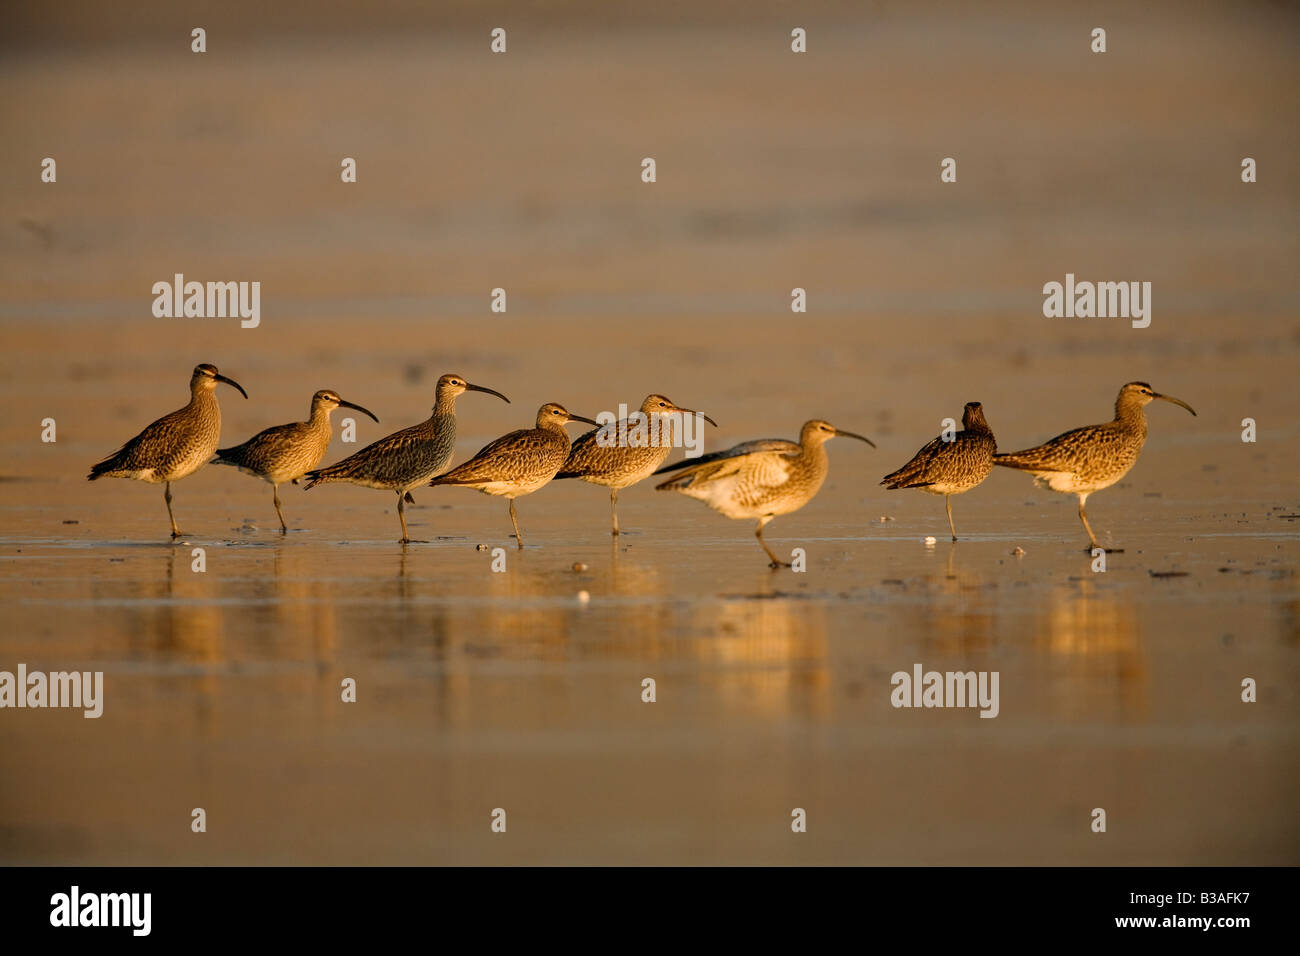 Regenbrachvogel - Numenius Phaeopus - Regenbrachvögel Schlafplatz am Sandstrand in warmes Licht Stockfoto